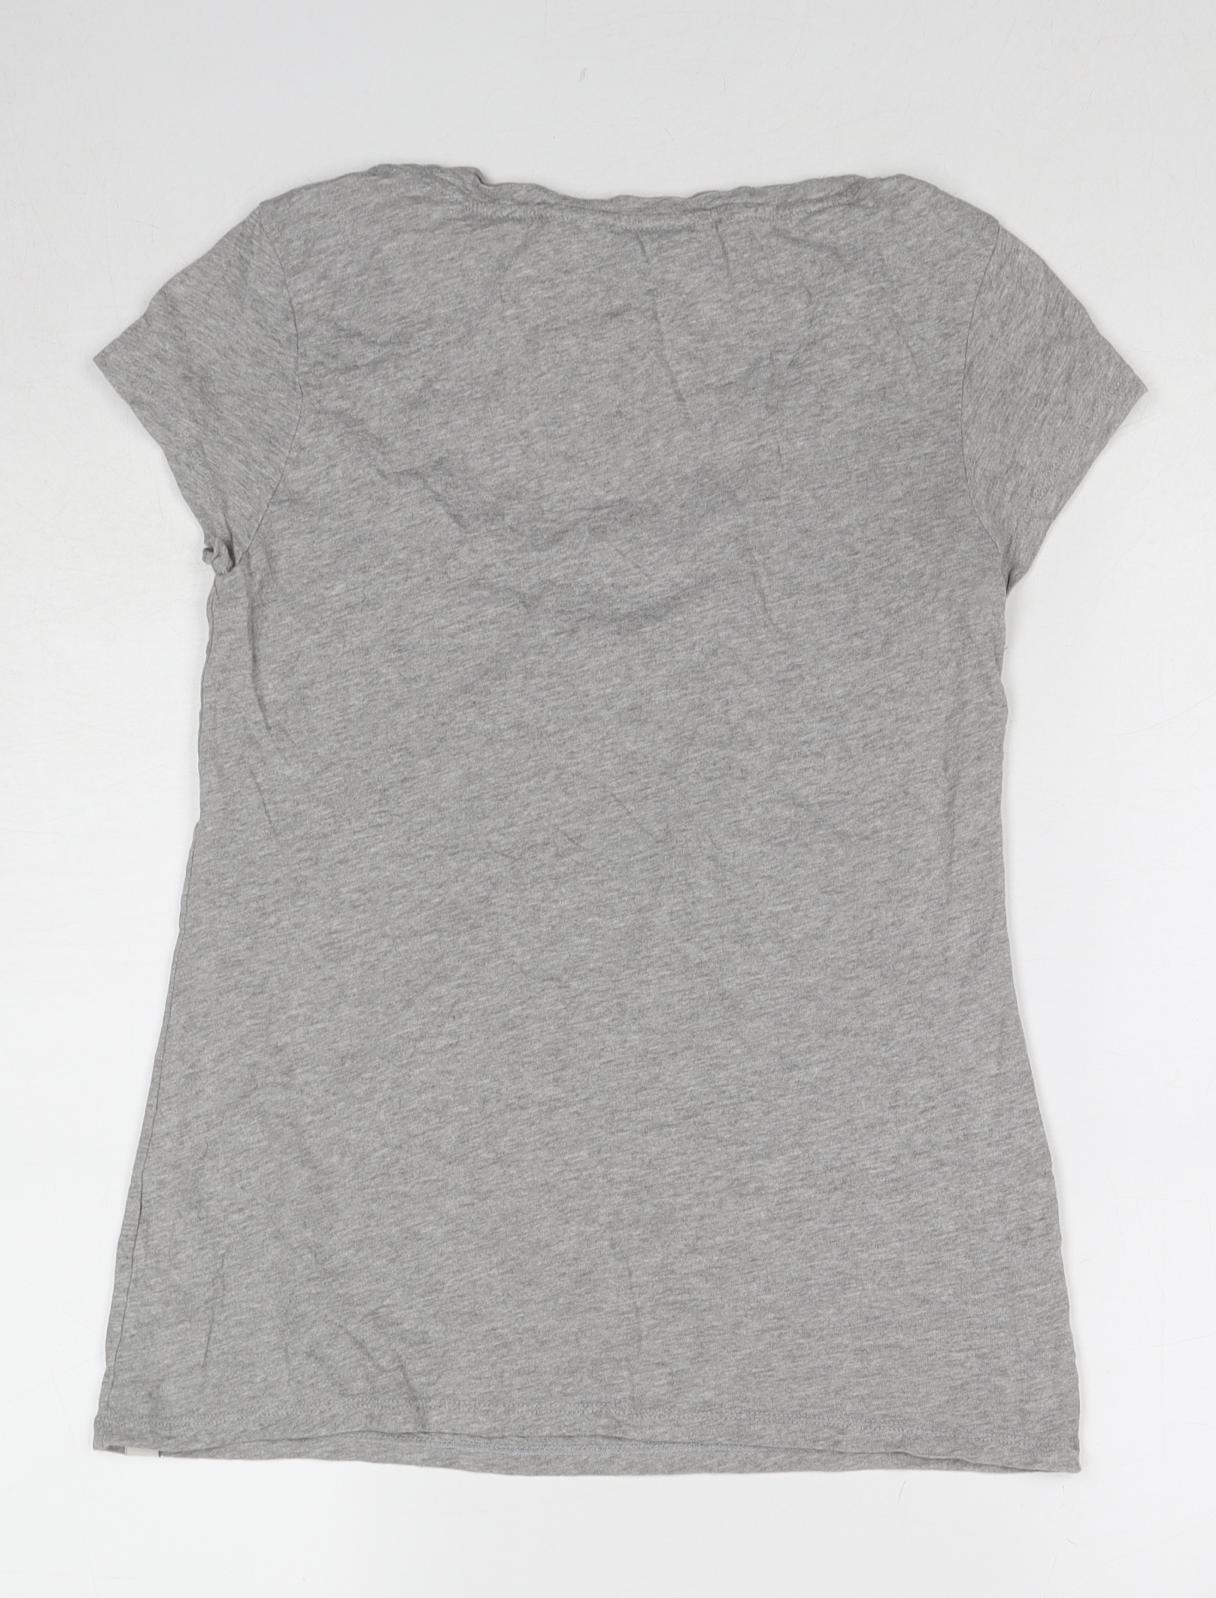 White Stuff Womens Grey Cotton Basic T-Shirt Size 8 Round Neck